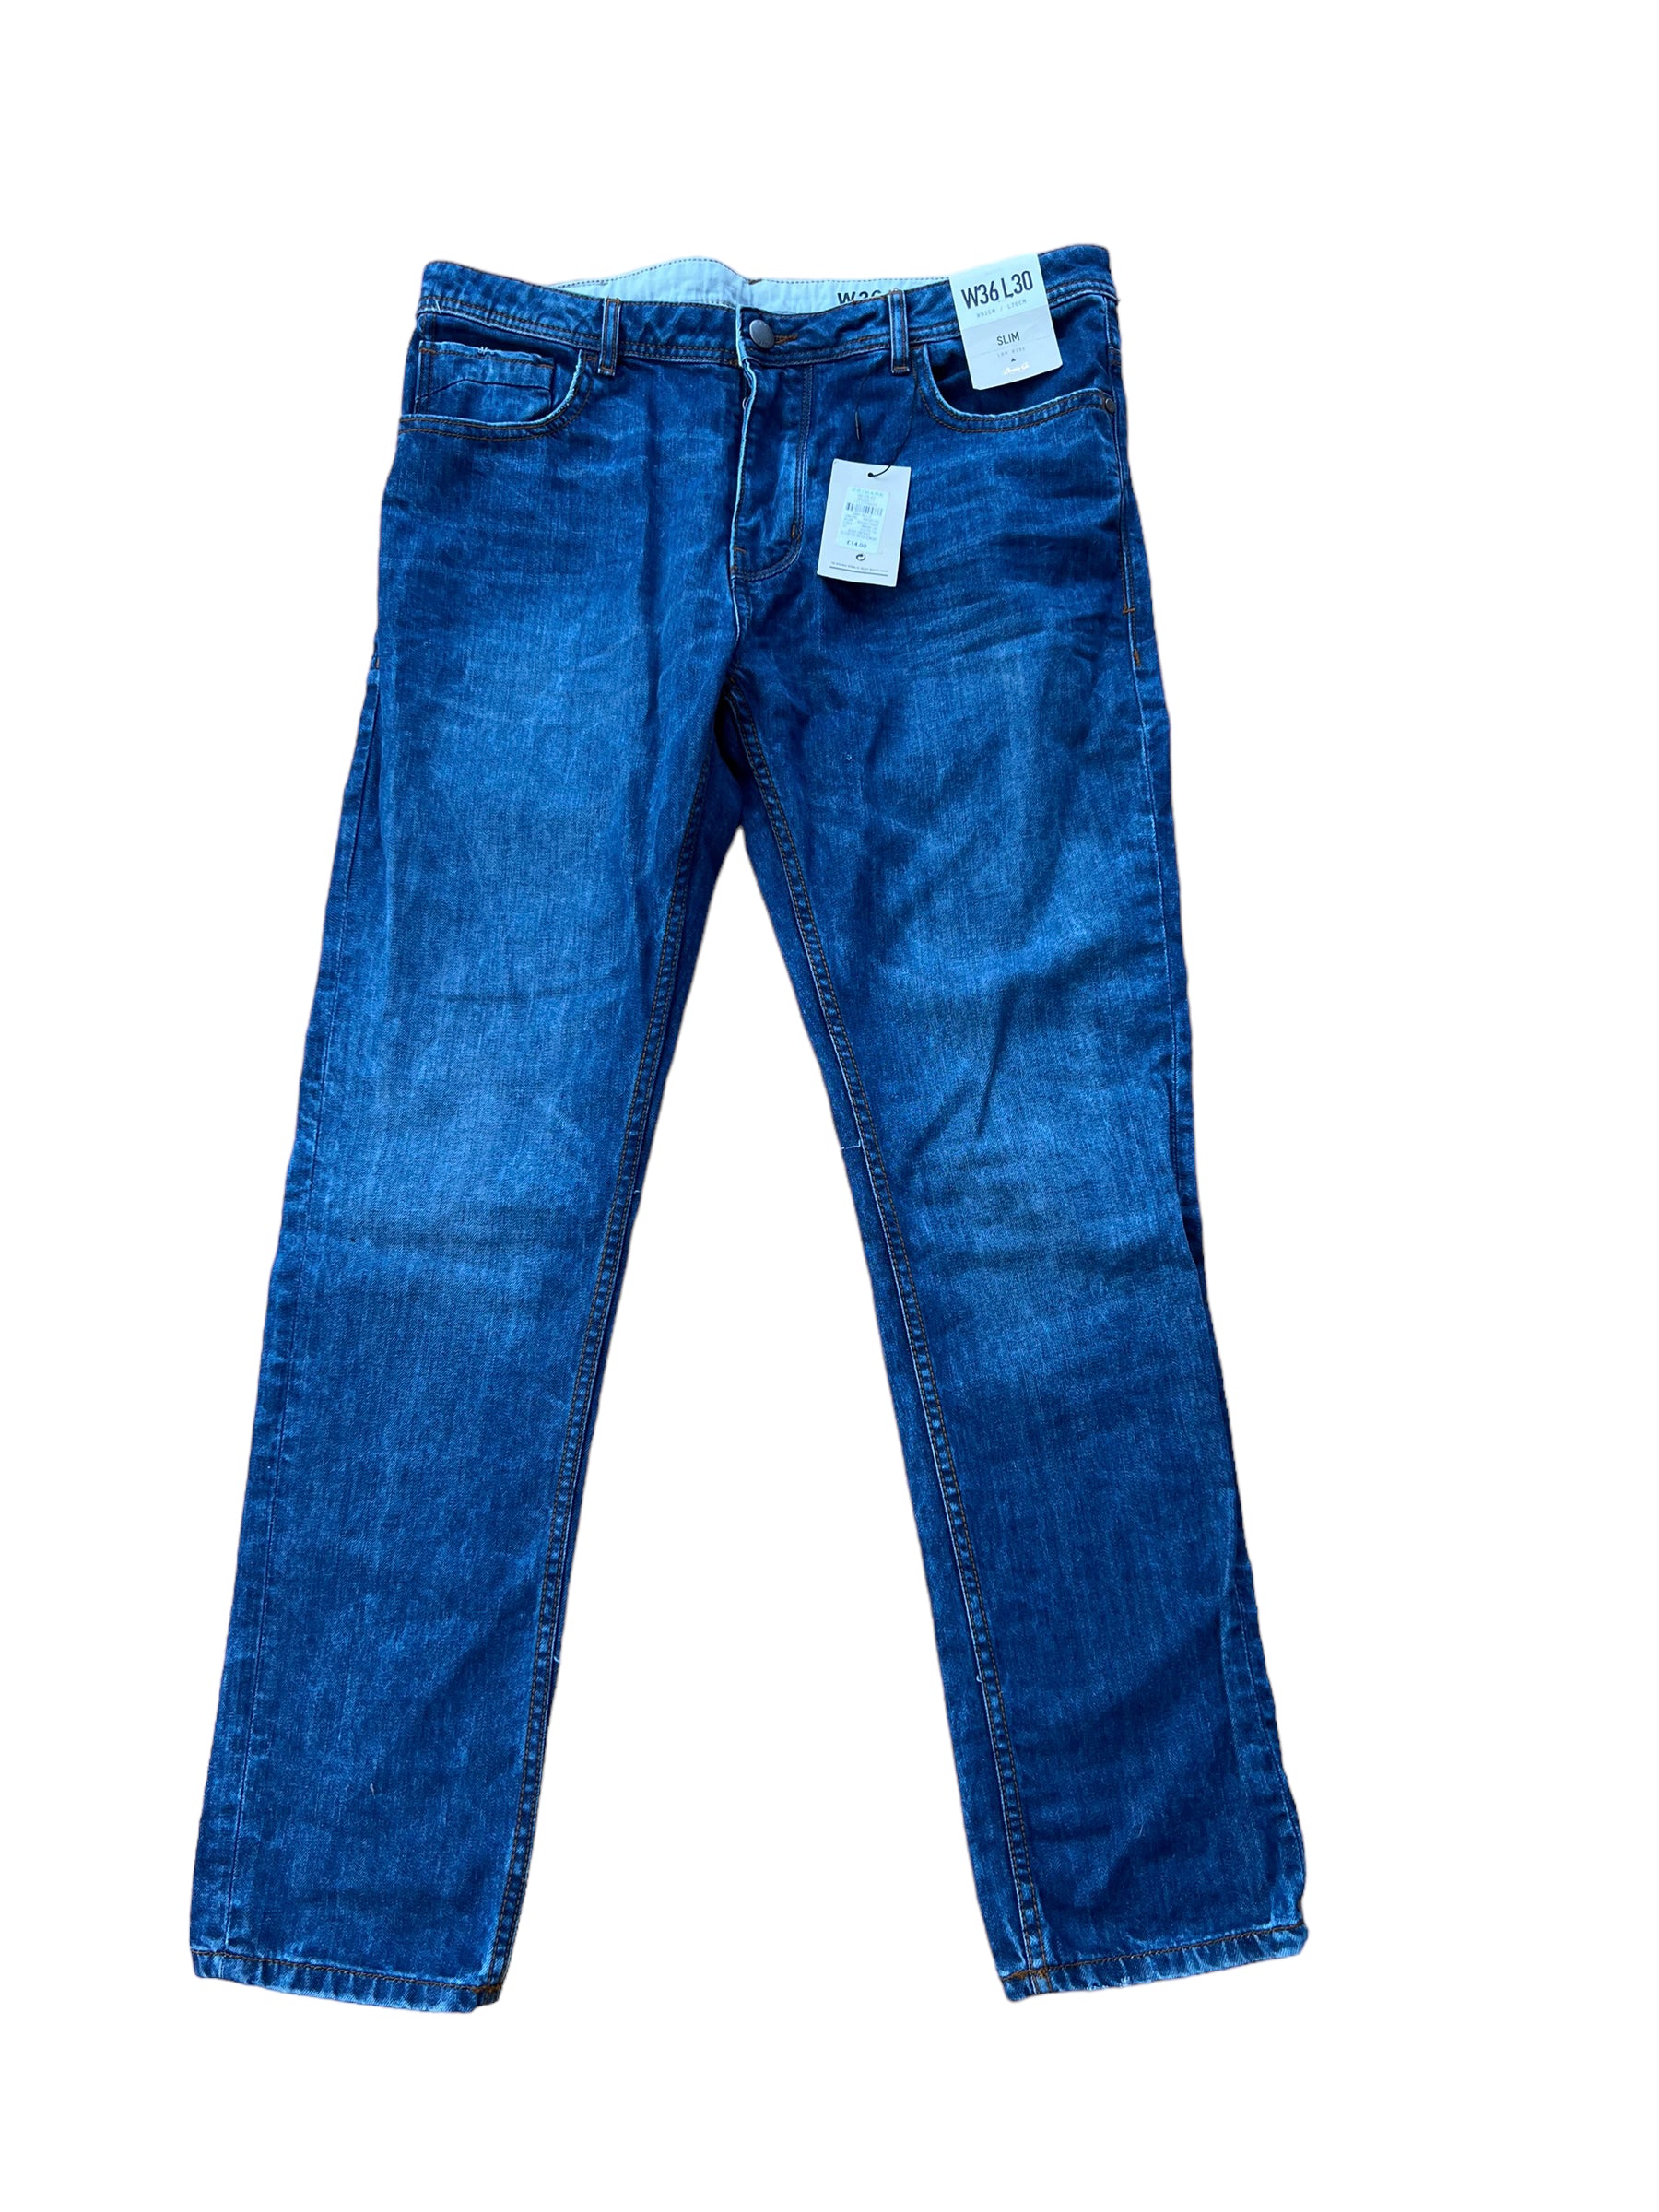 U.S. Polo Assn. Denim Co. Slim Men Black Jeans - Buy U.S. Polo Assn. Denim  Co. Slim Men Black Jeans Online at Best Prices in India | Flipkart.com